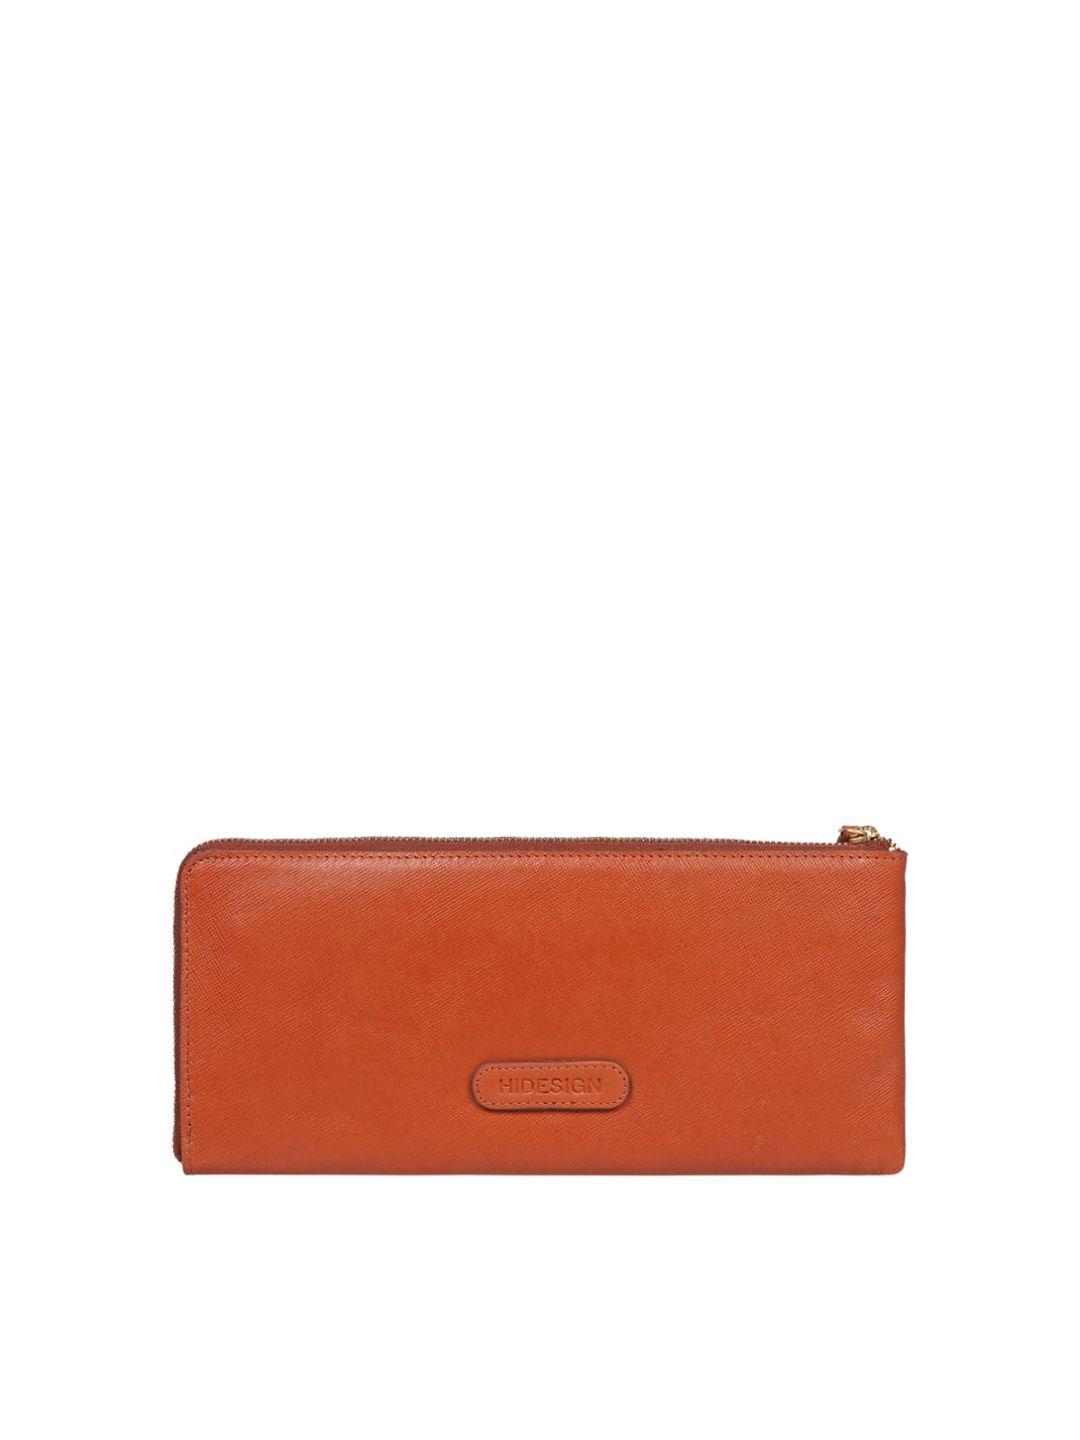 hidesign-leather-purse-clutch